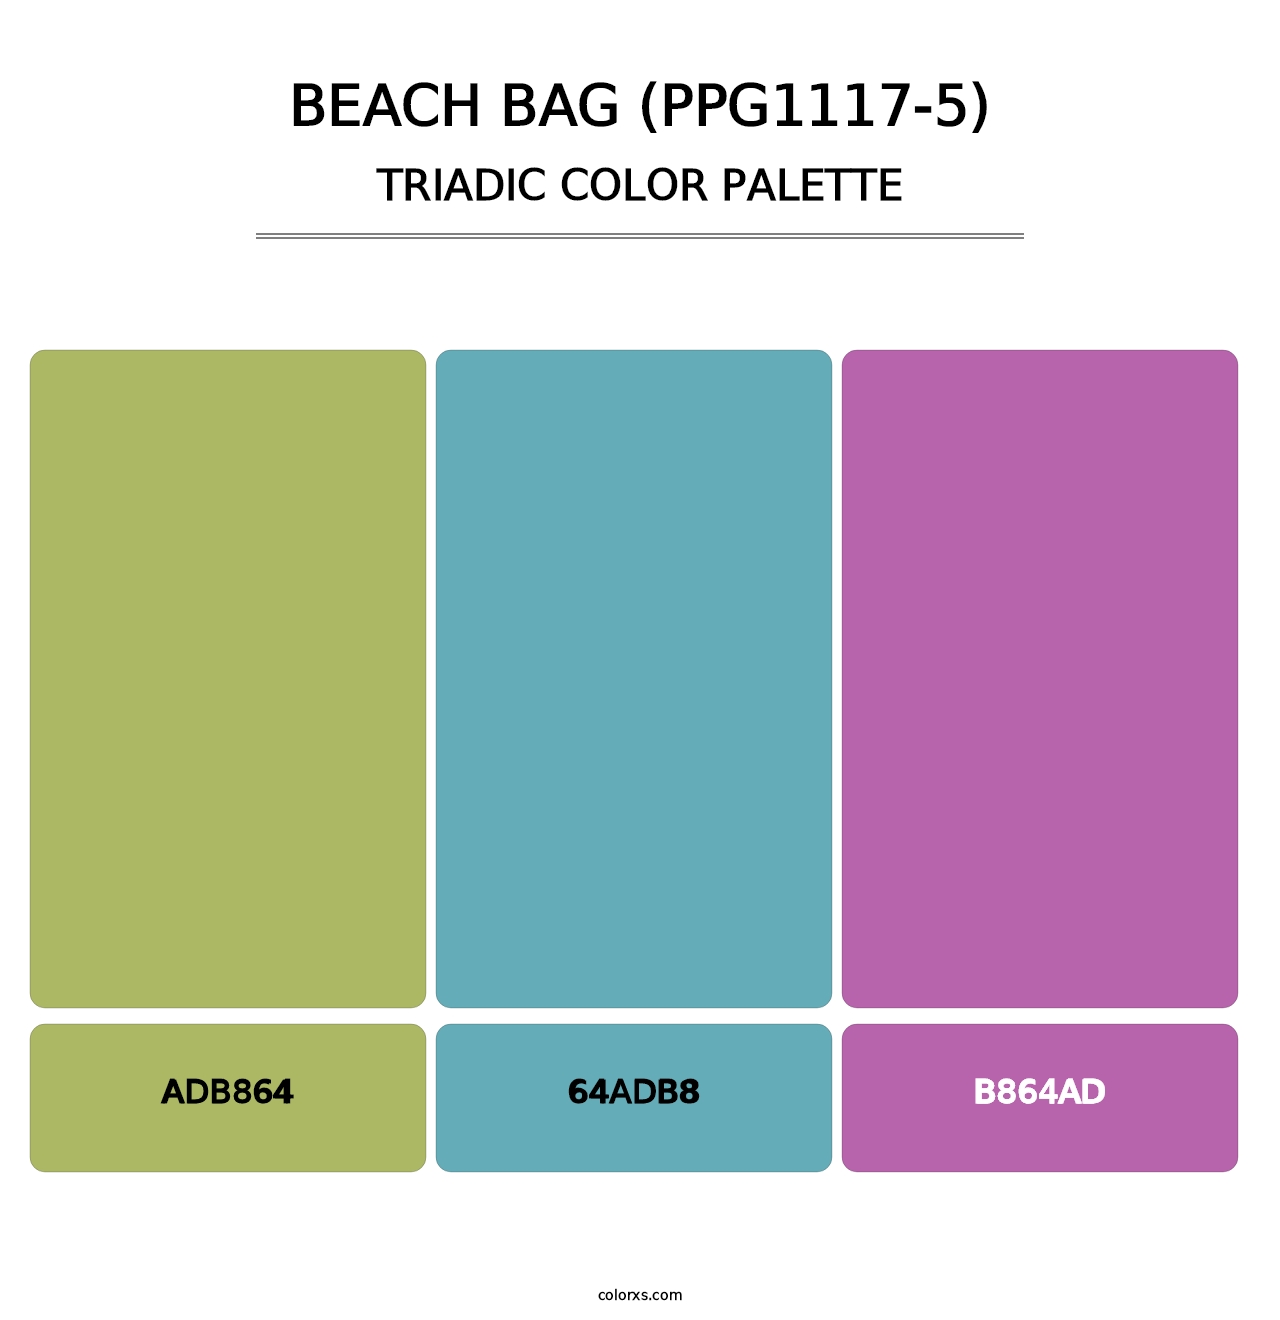 Beach Bag (PPG1117-5) - Triadic Color Palette